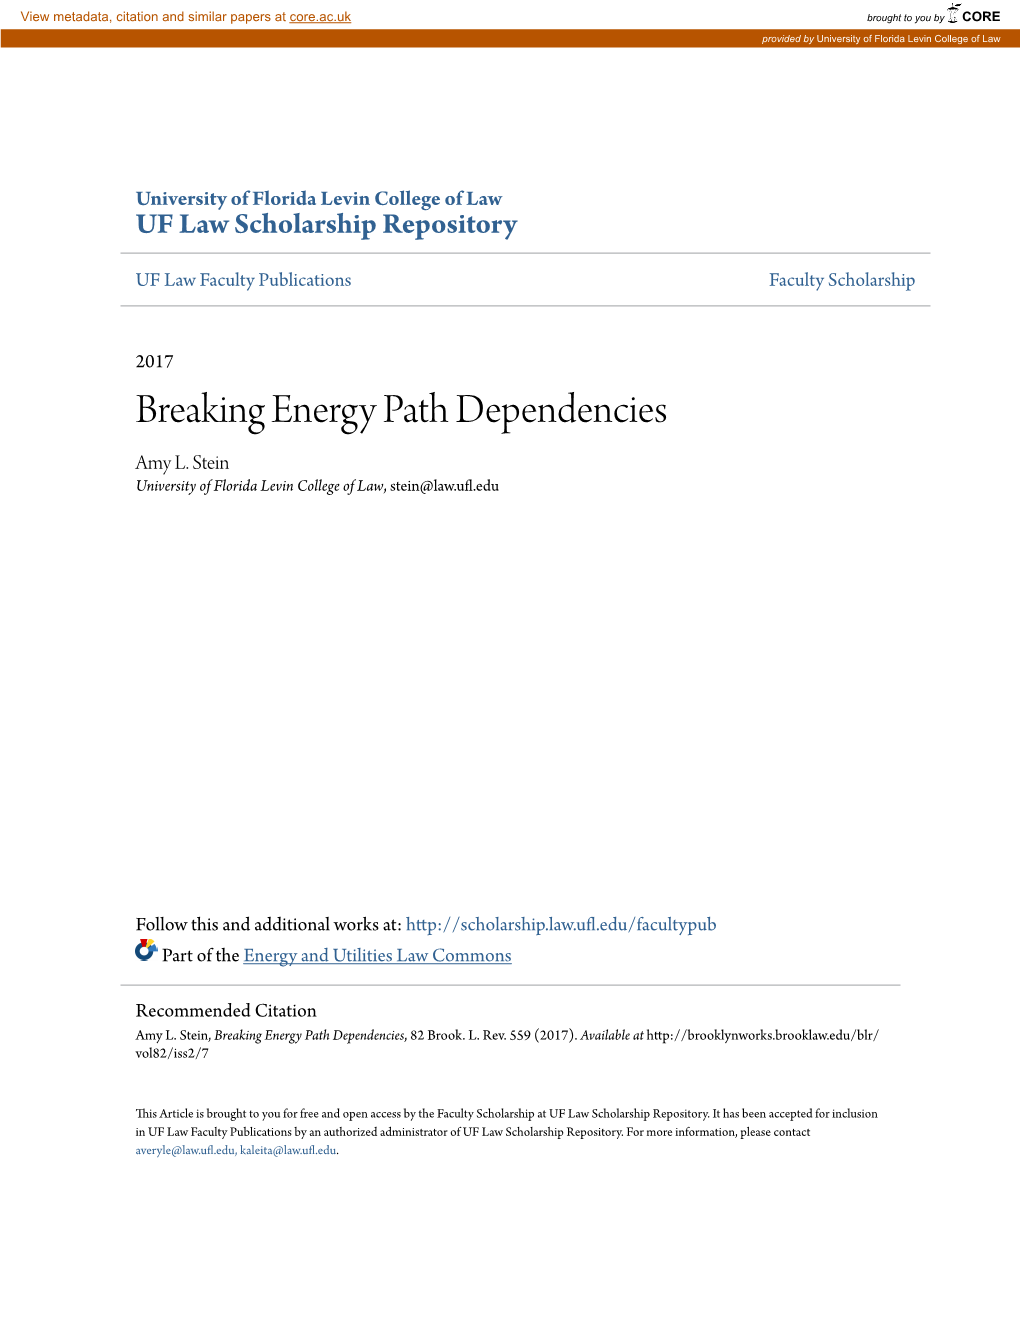 Breaking Energy Path Dependencies Amy L